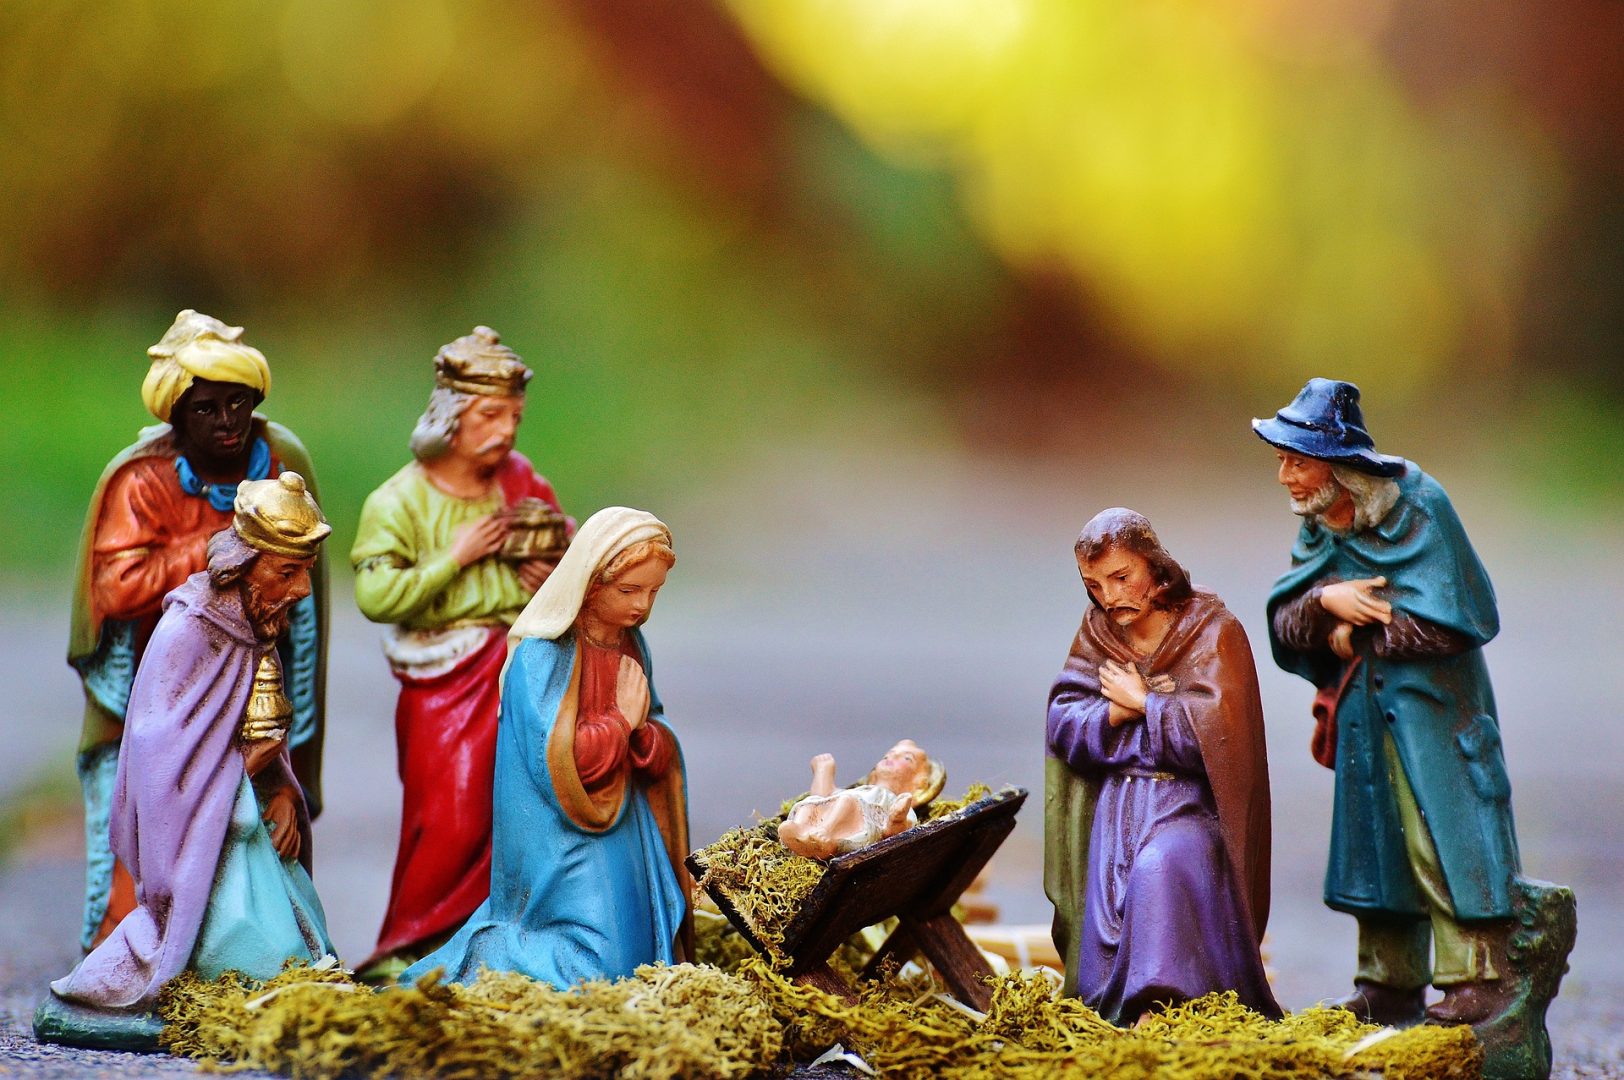 Image par Alexa de Pixabay nativity scene, creche Noel